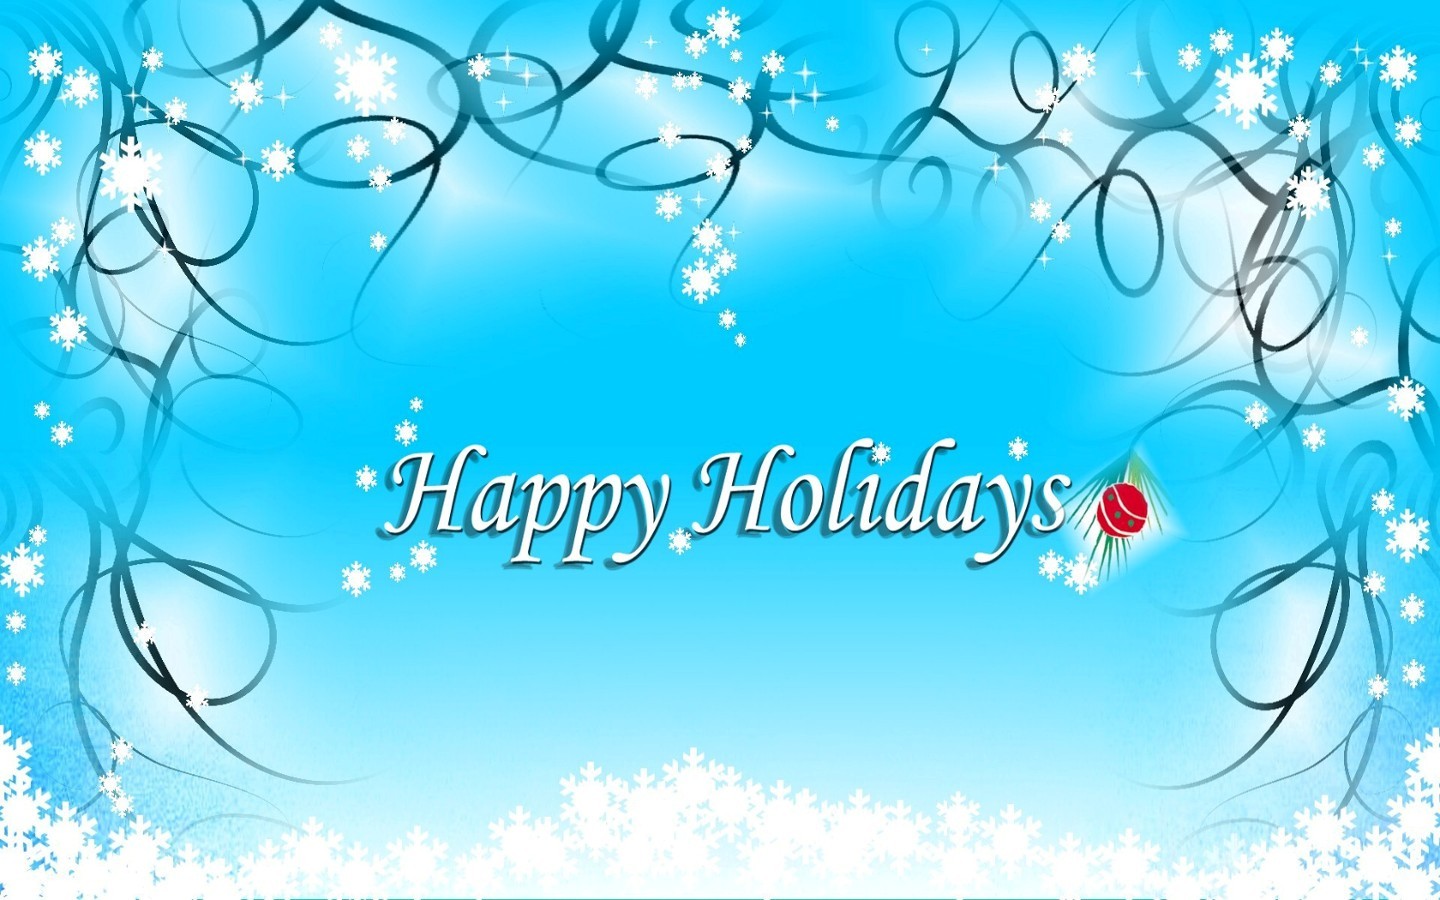 Happy Holidays Image HD Wallpaper Of Greeting